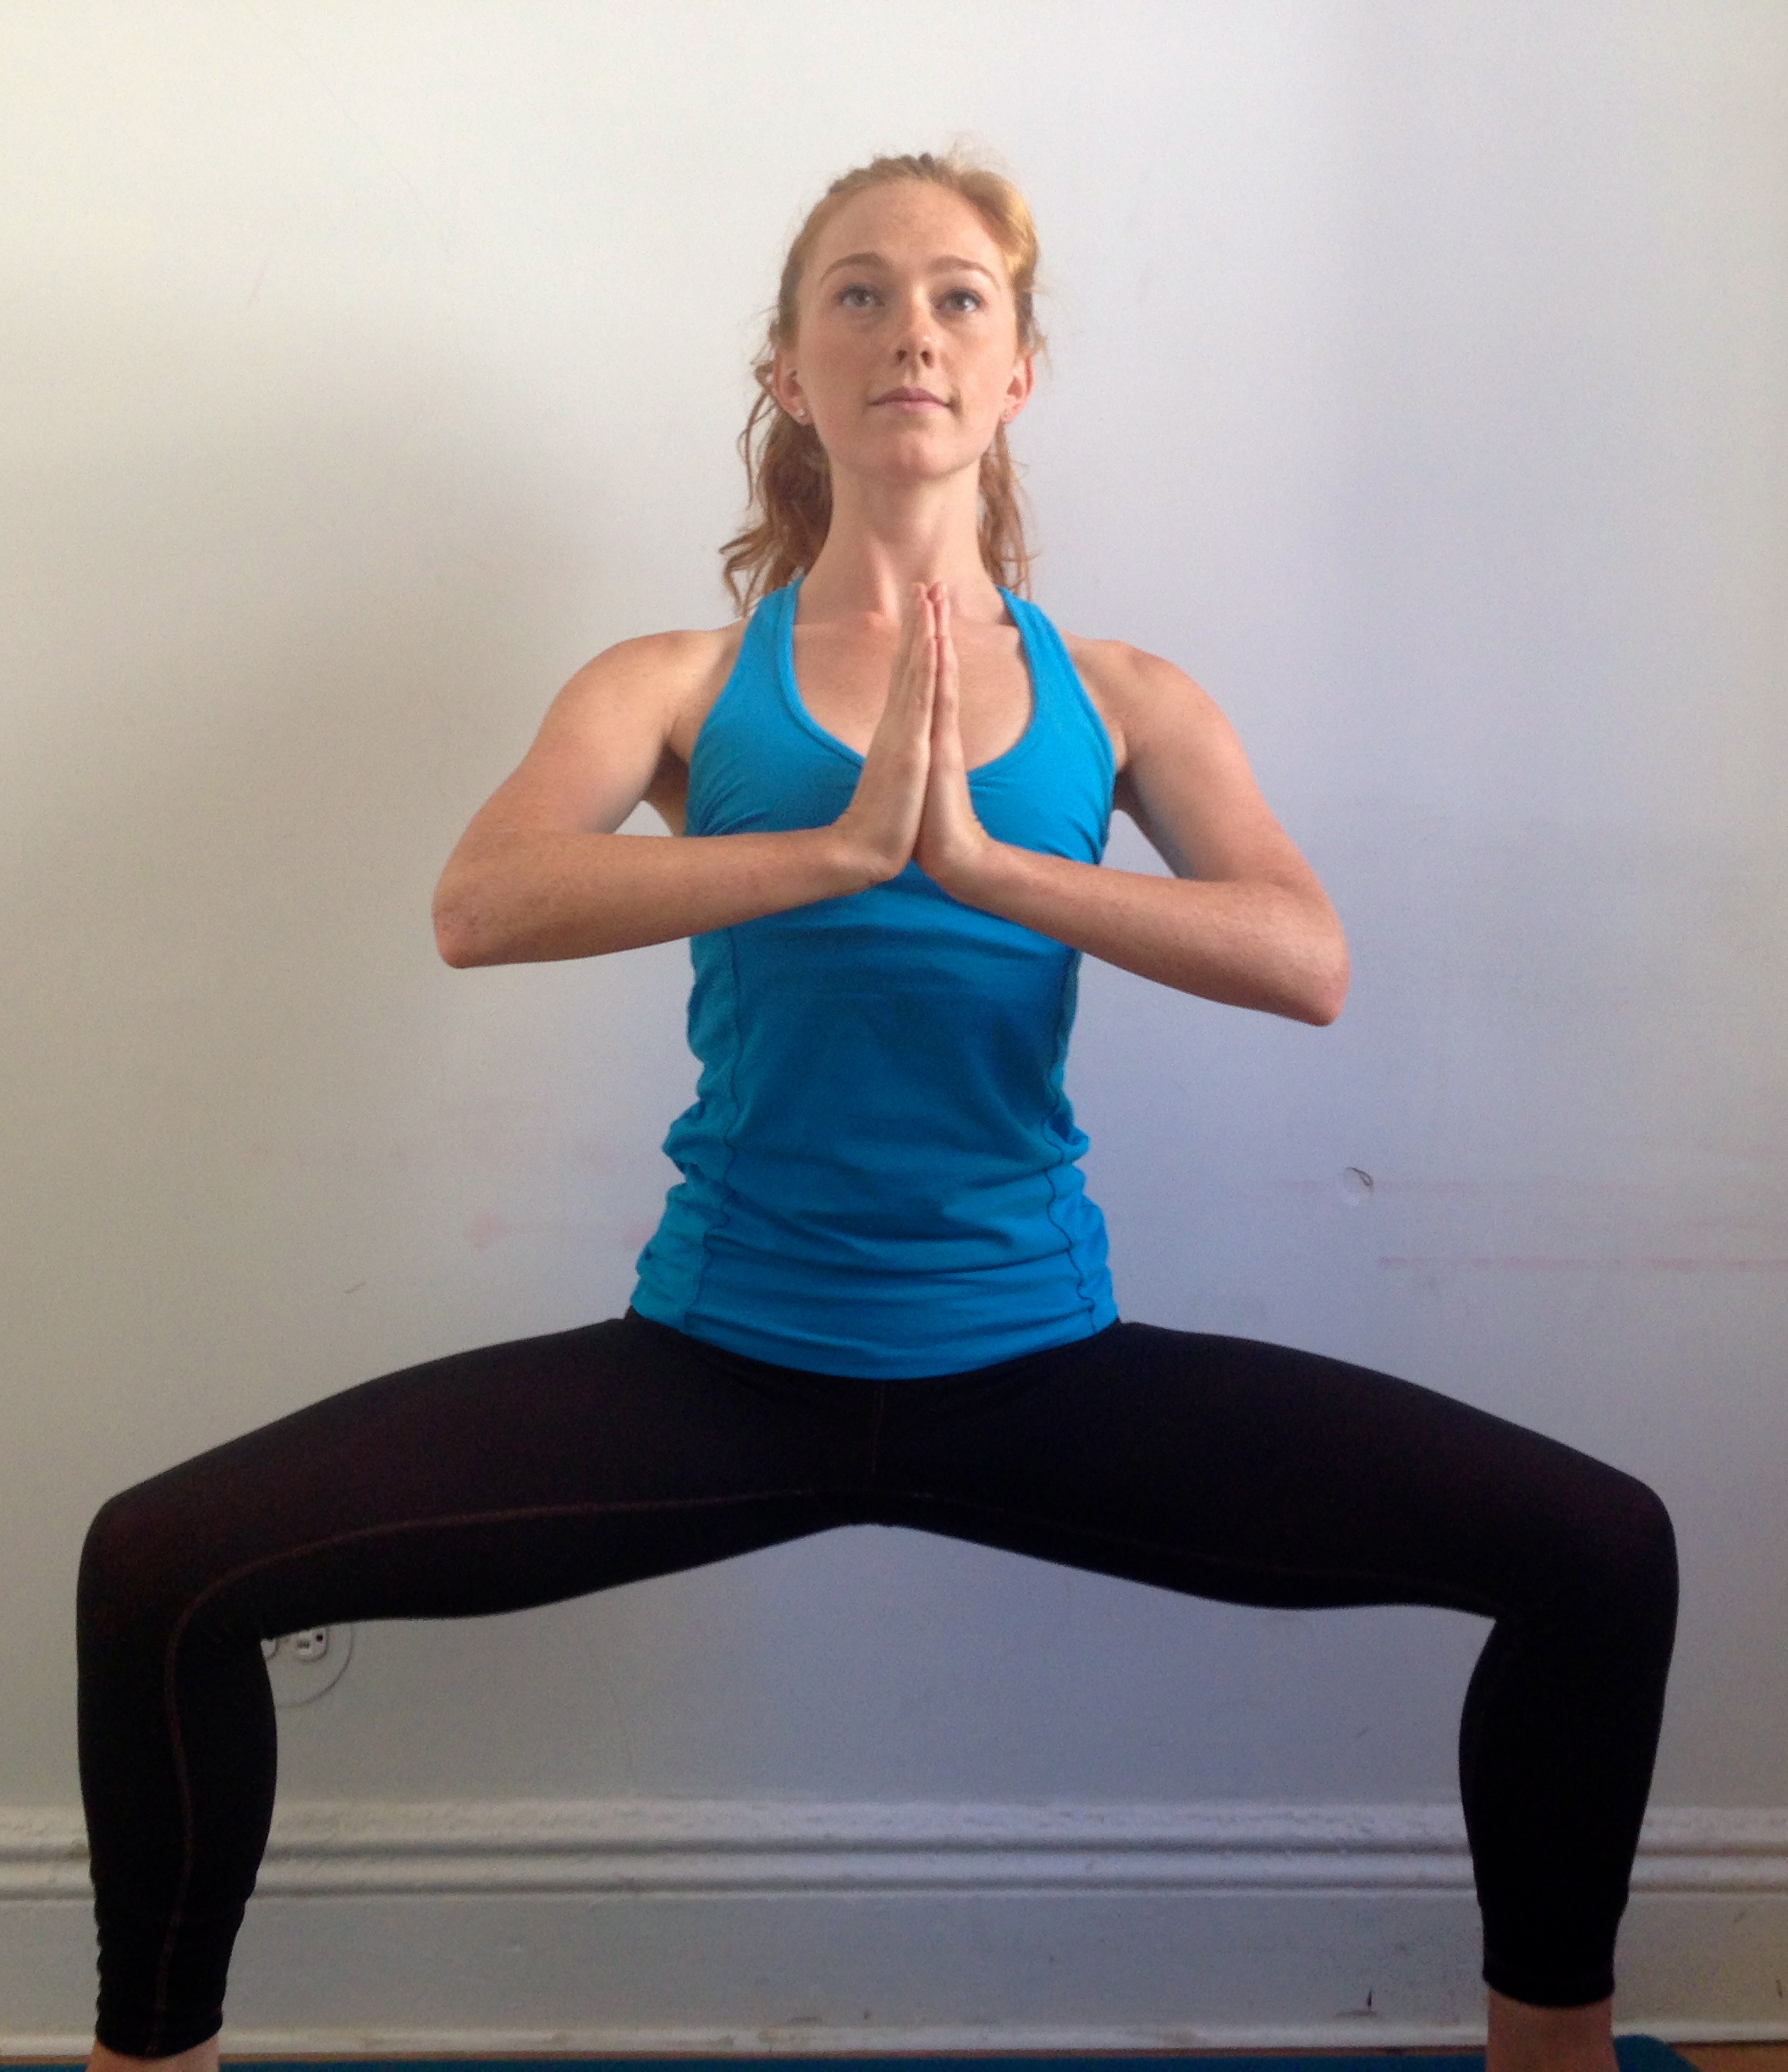 Yoga for Pregnant Women - Poses & Benefits | Krishna Coming